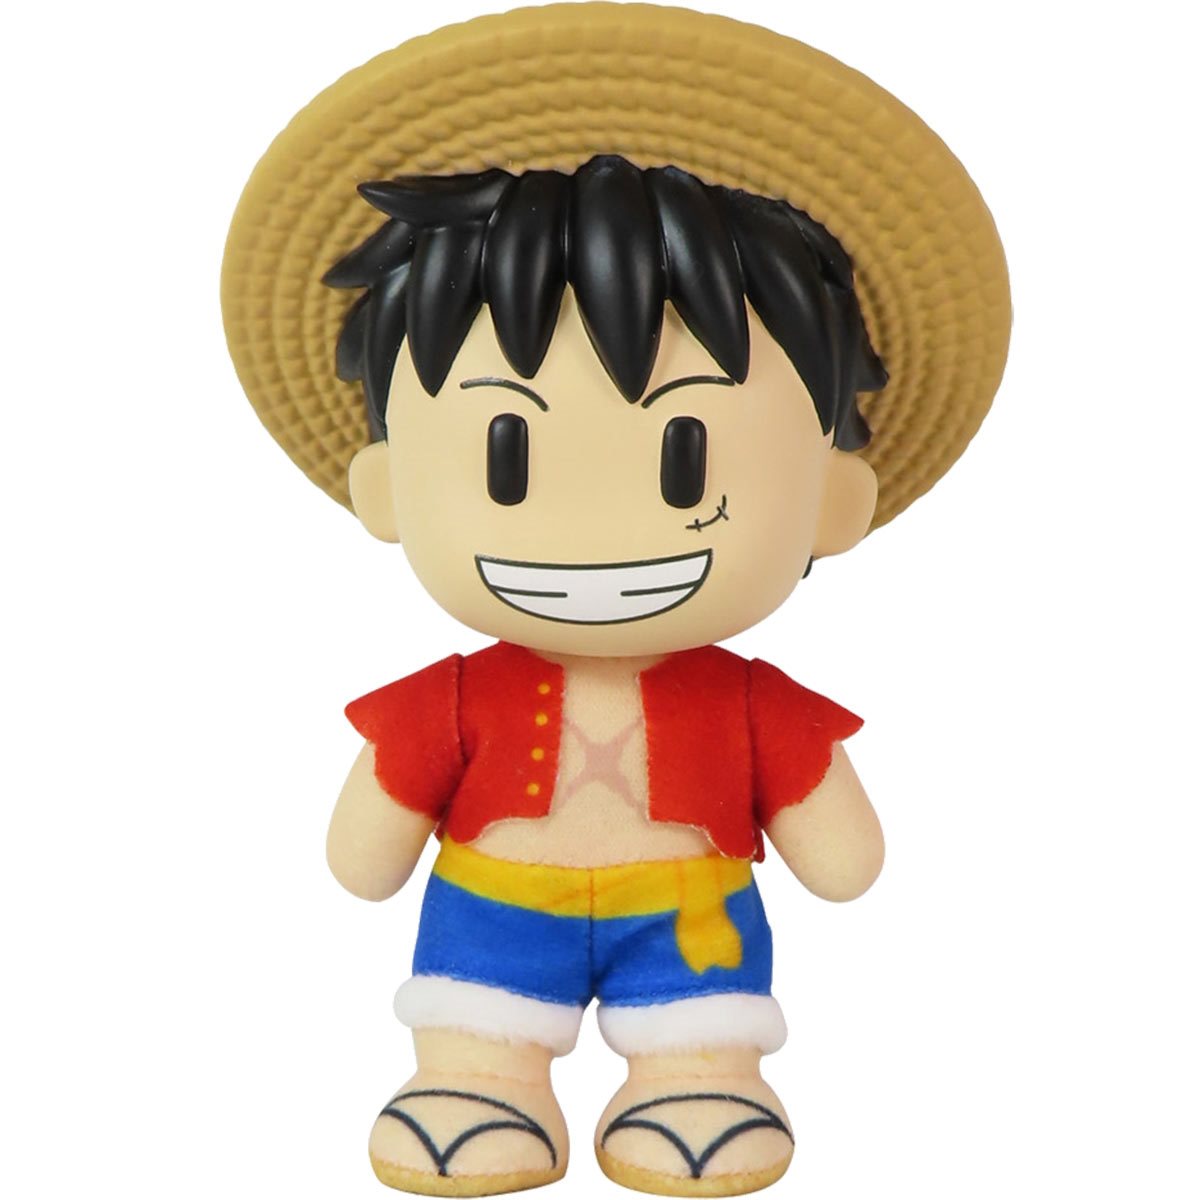 ONE PIECE Figurine Straw Hat Luffy 7 Inch